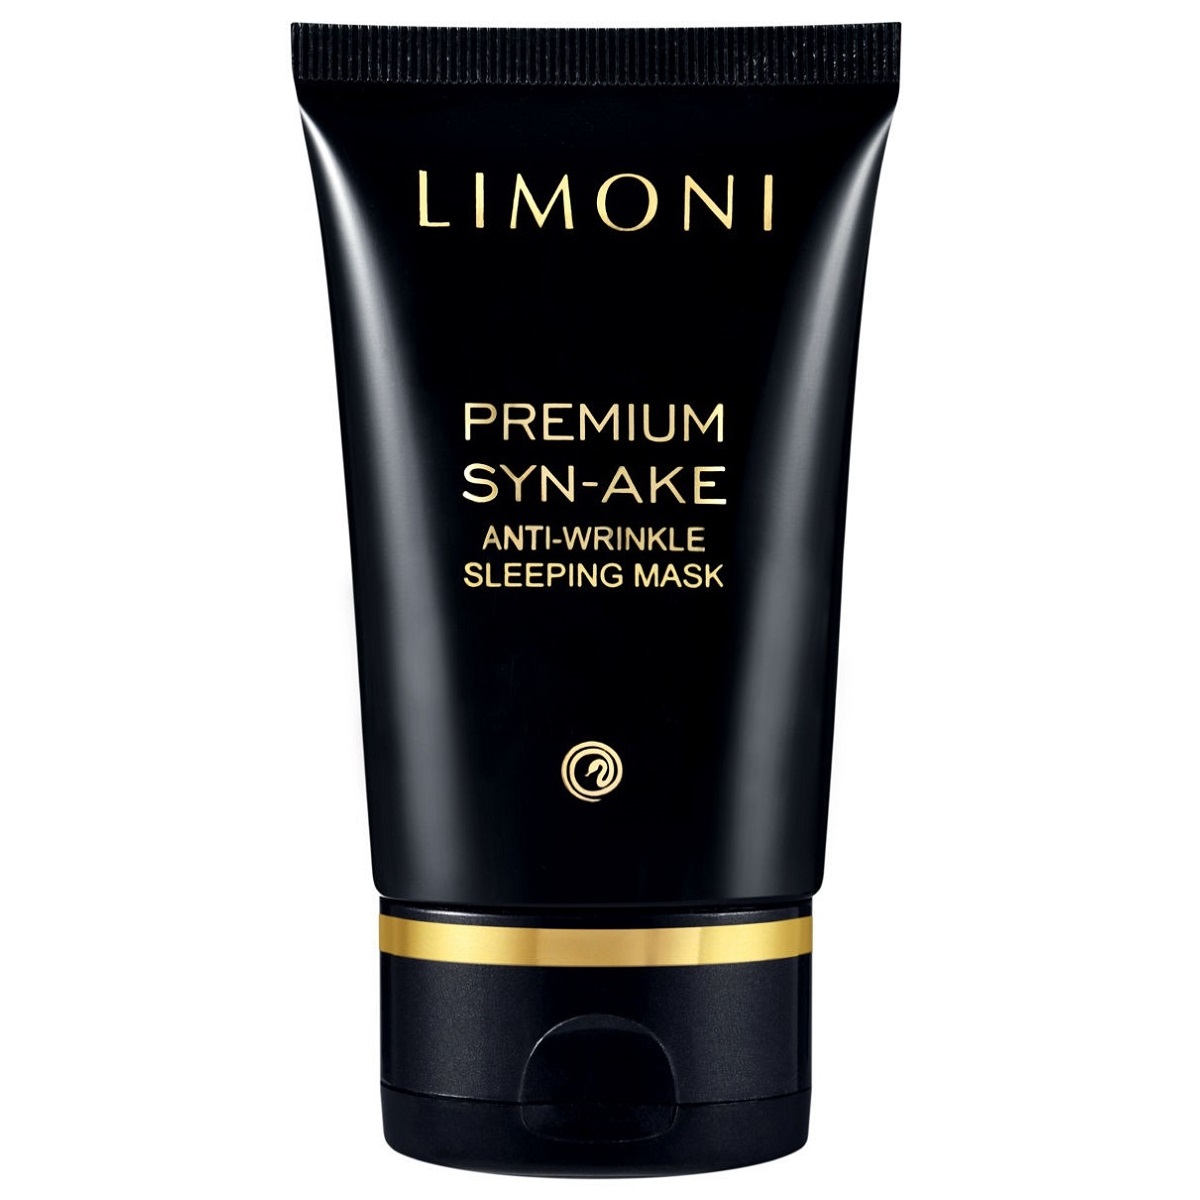 Limoni Антивозрастная ночная маска со змеиным ядом Anti-Wrinkle Sleeping Mask, 50 мл (Limoni, Premium Syn-Ake)